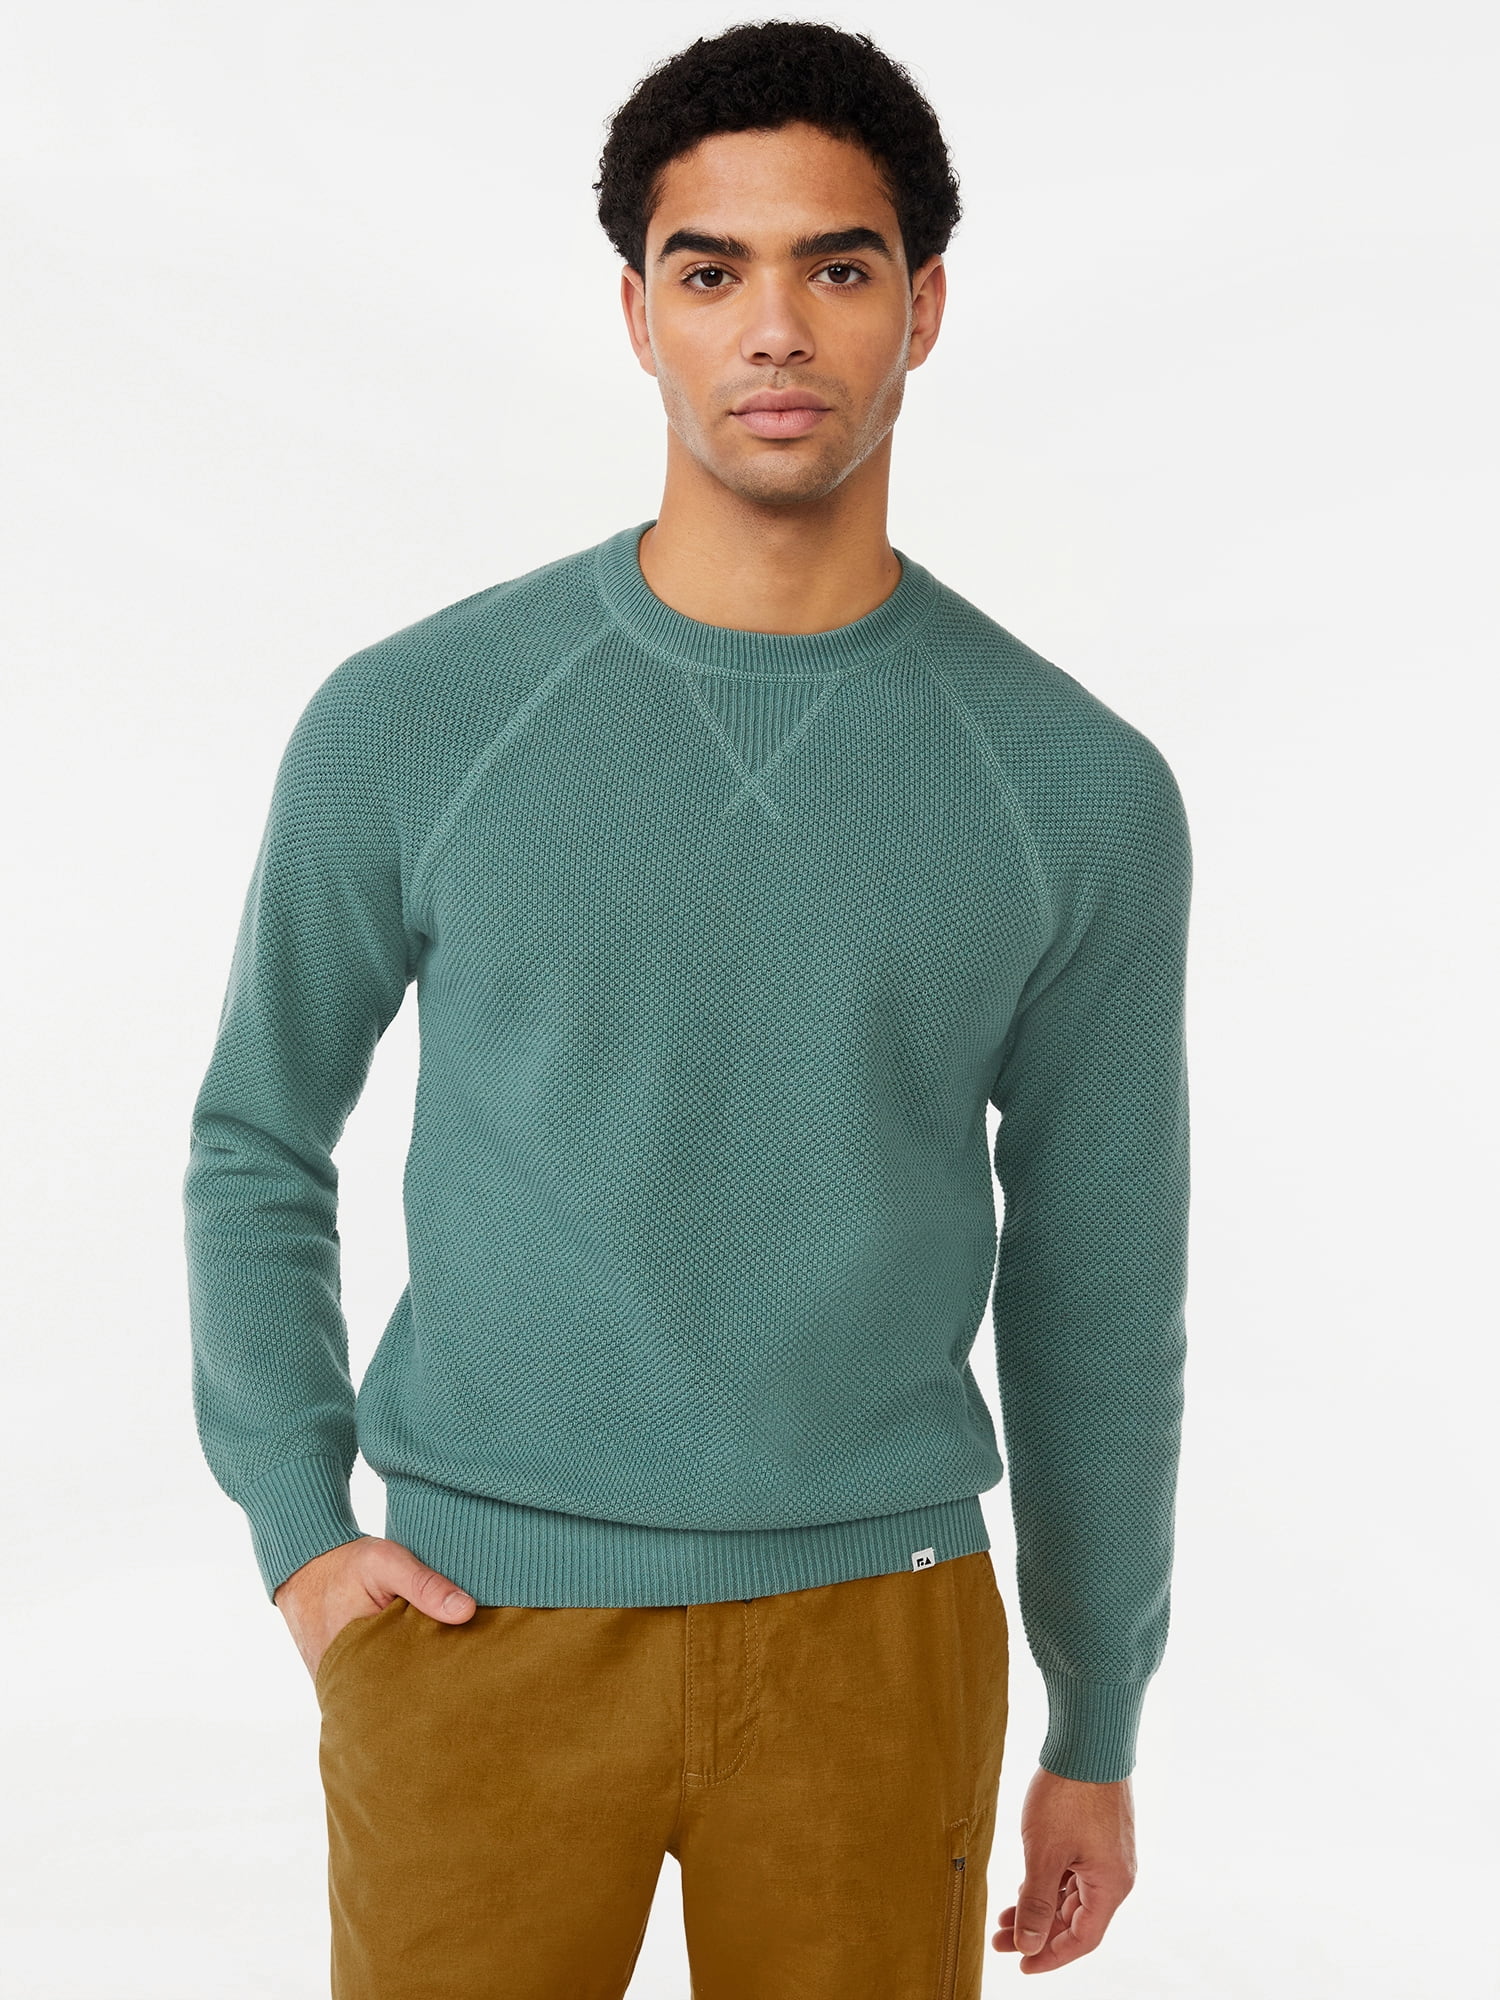 Free Assembly Men's Textured Sweater - Walmart.com